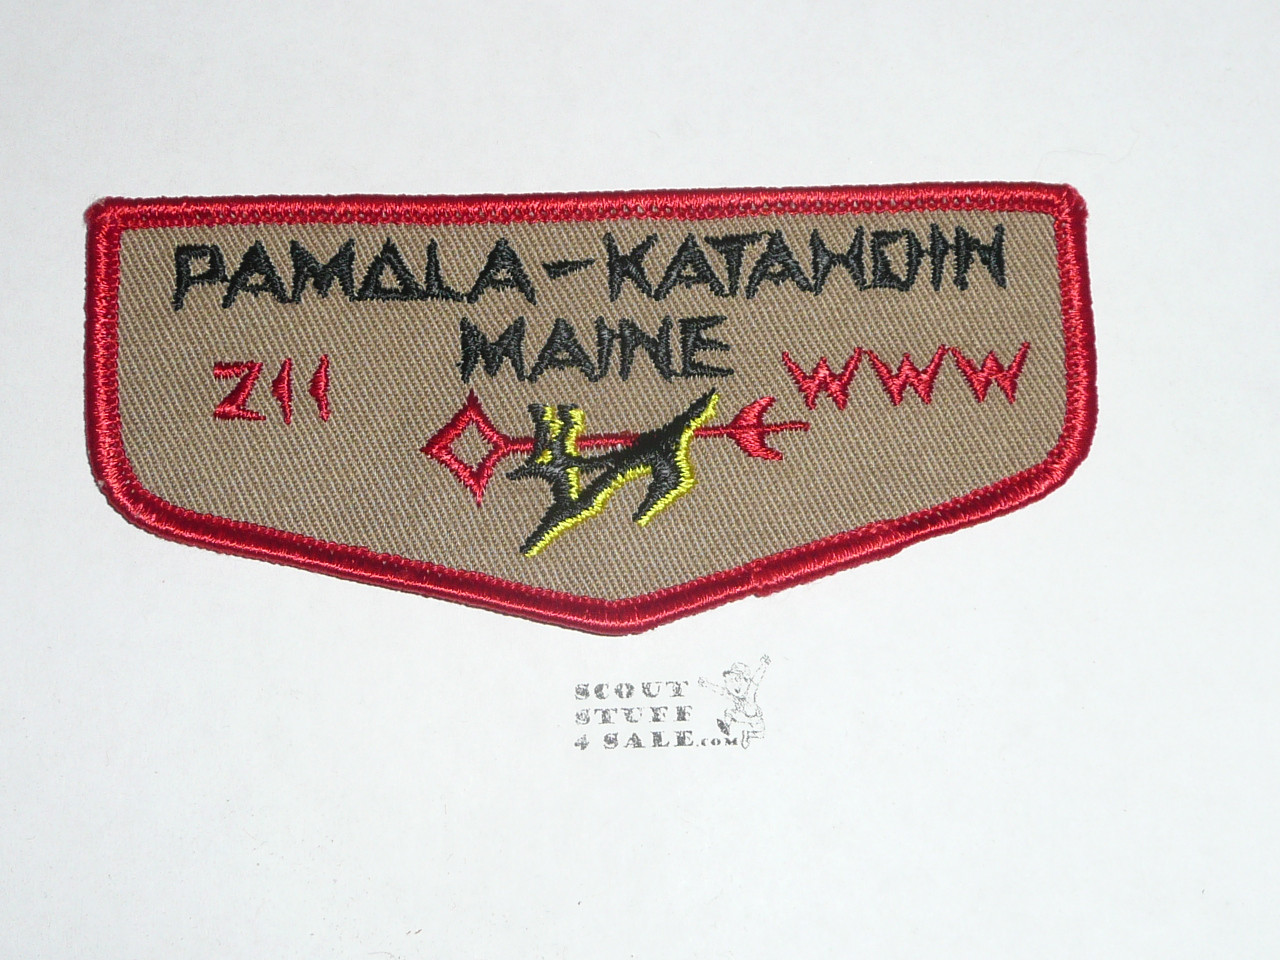 Order of the Arrow Lodge #211 Pamala - Katahdin f1 Flap Patch